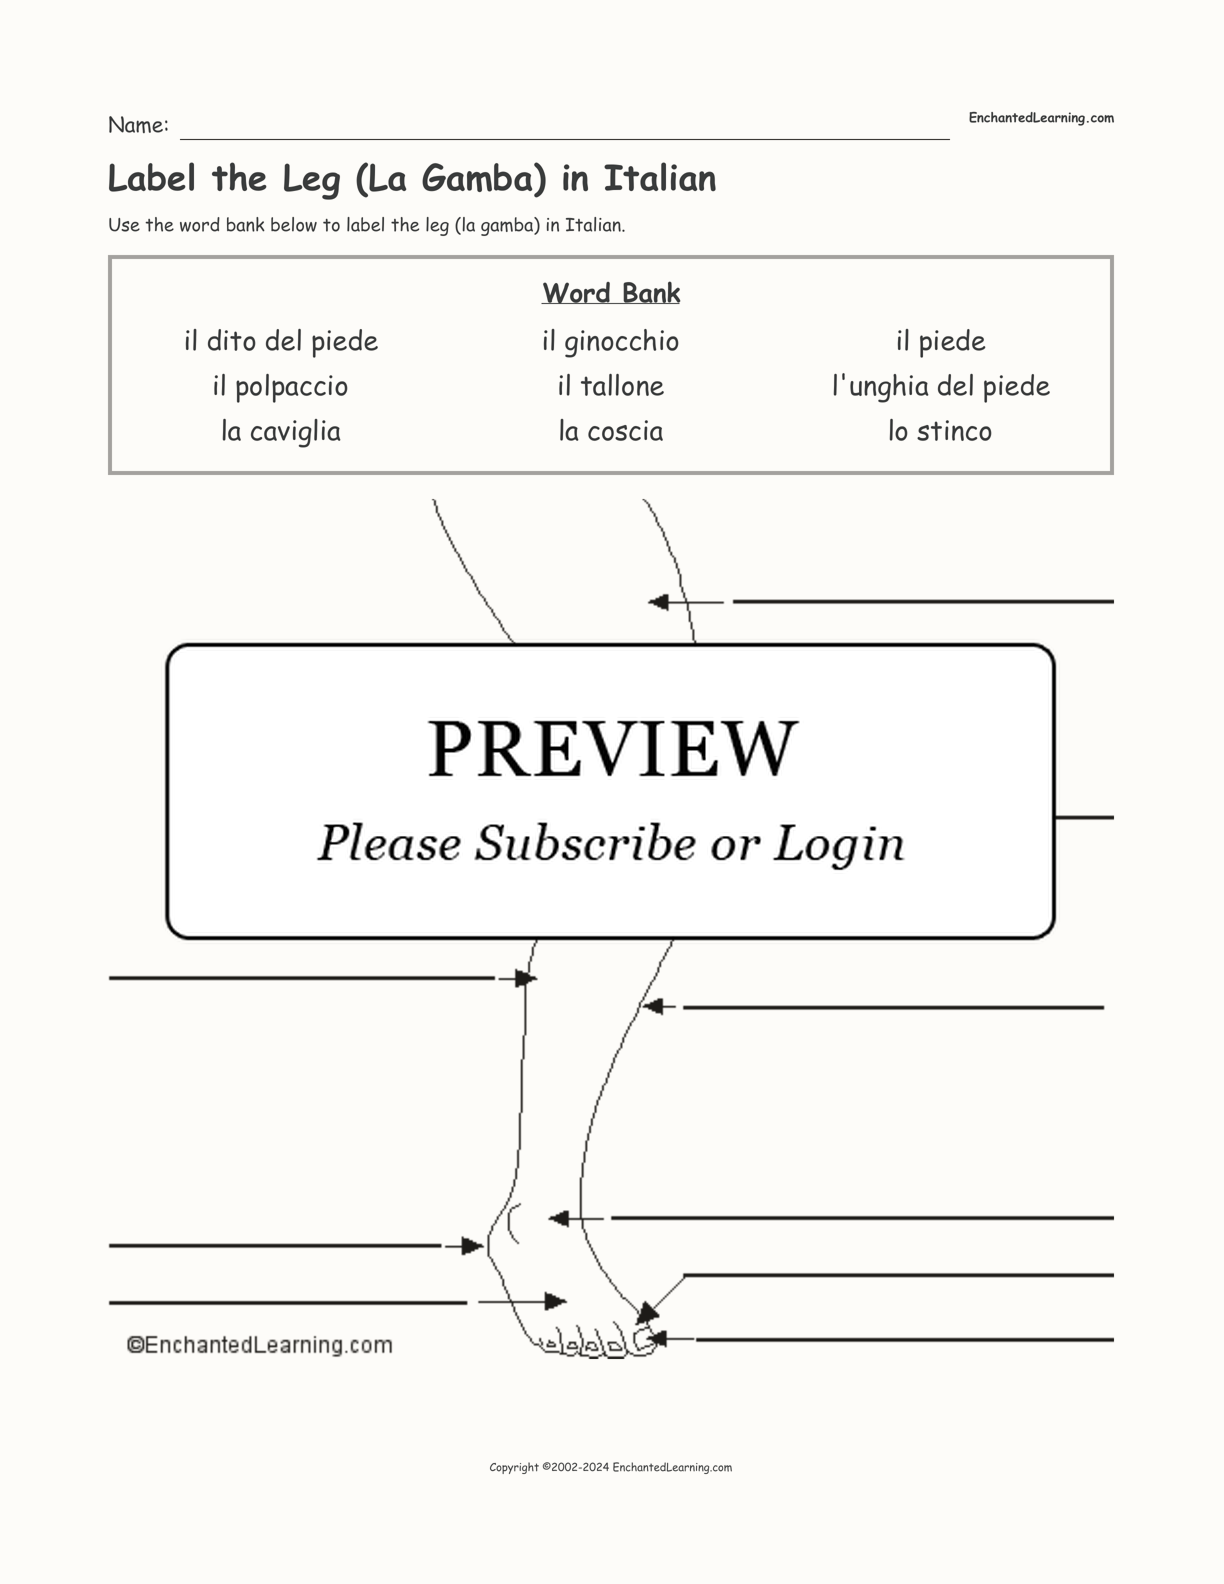 Label the Leg (La Gamba) in Italian interactive worksheet page 1